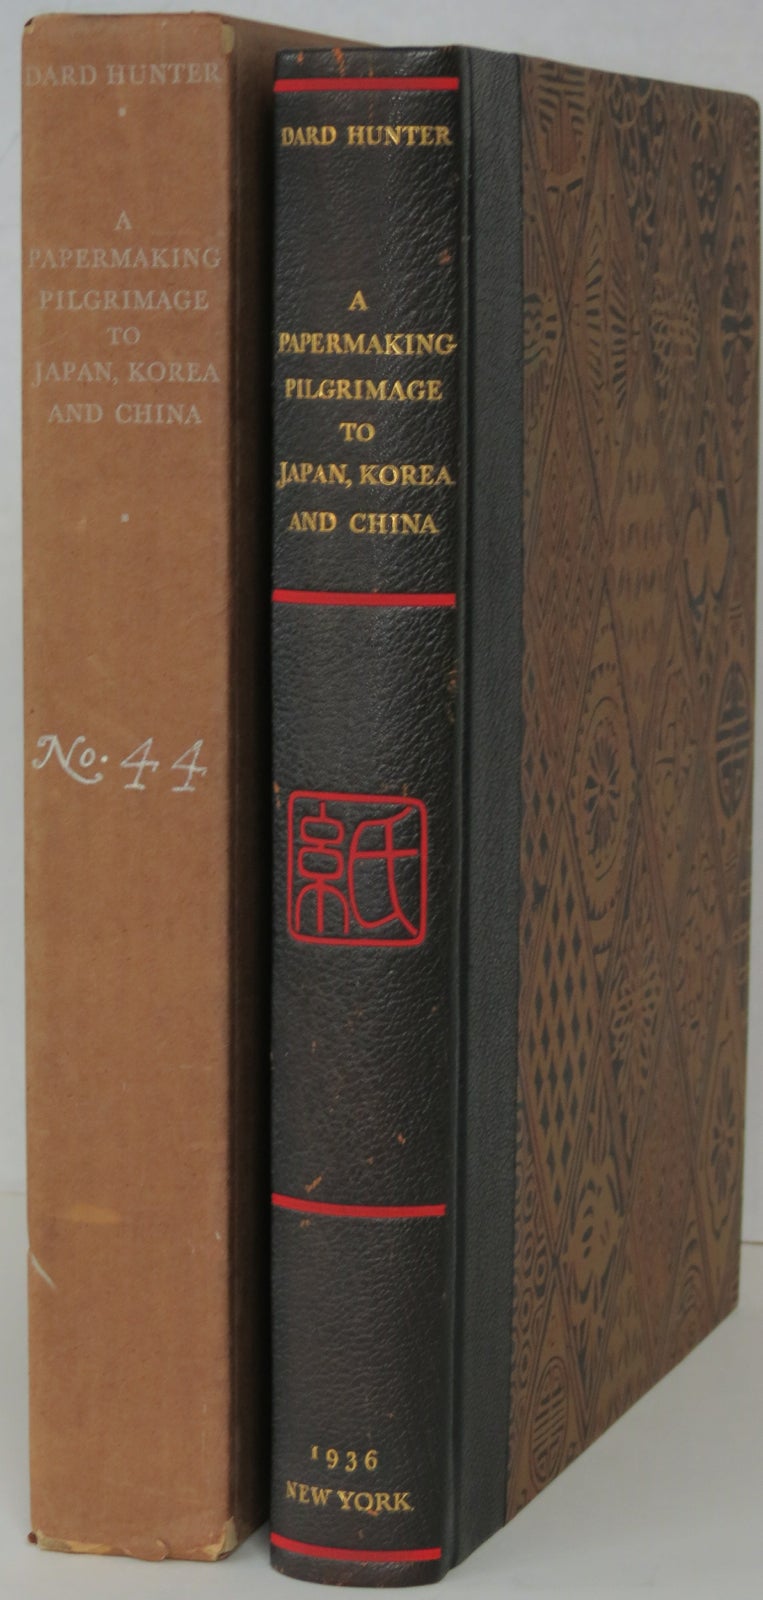 A PAPERMAKING PILGRIMAGE TO JAPAN, KOREA AND CHINA. Dard Hunter